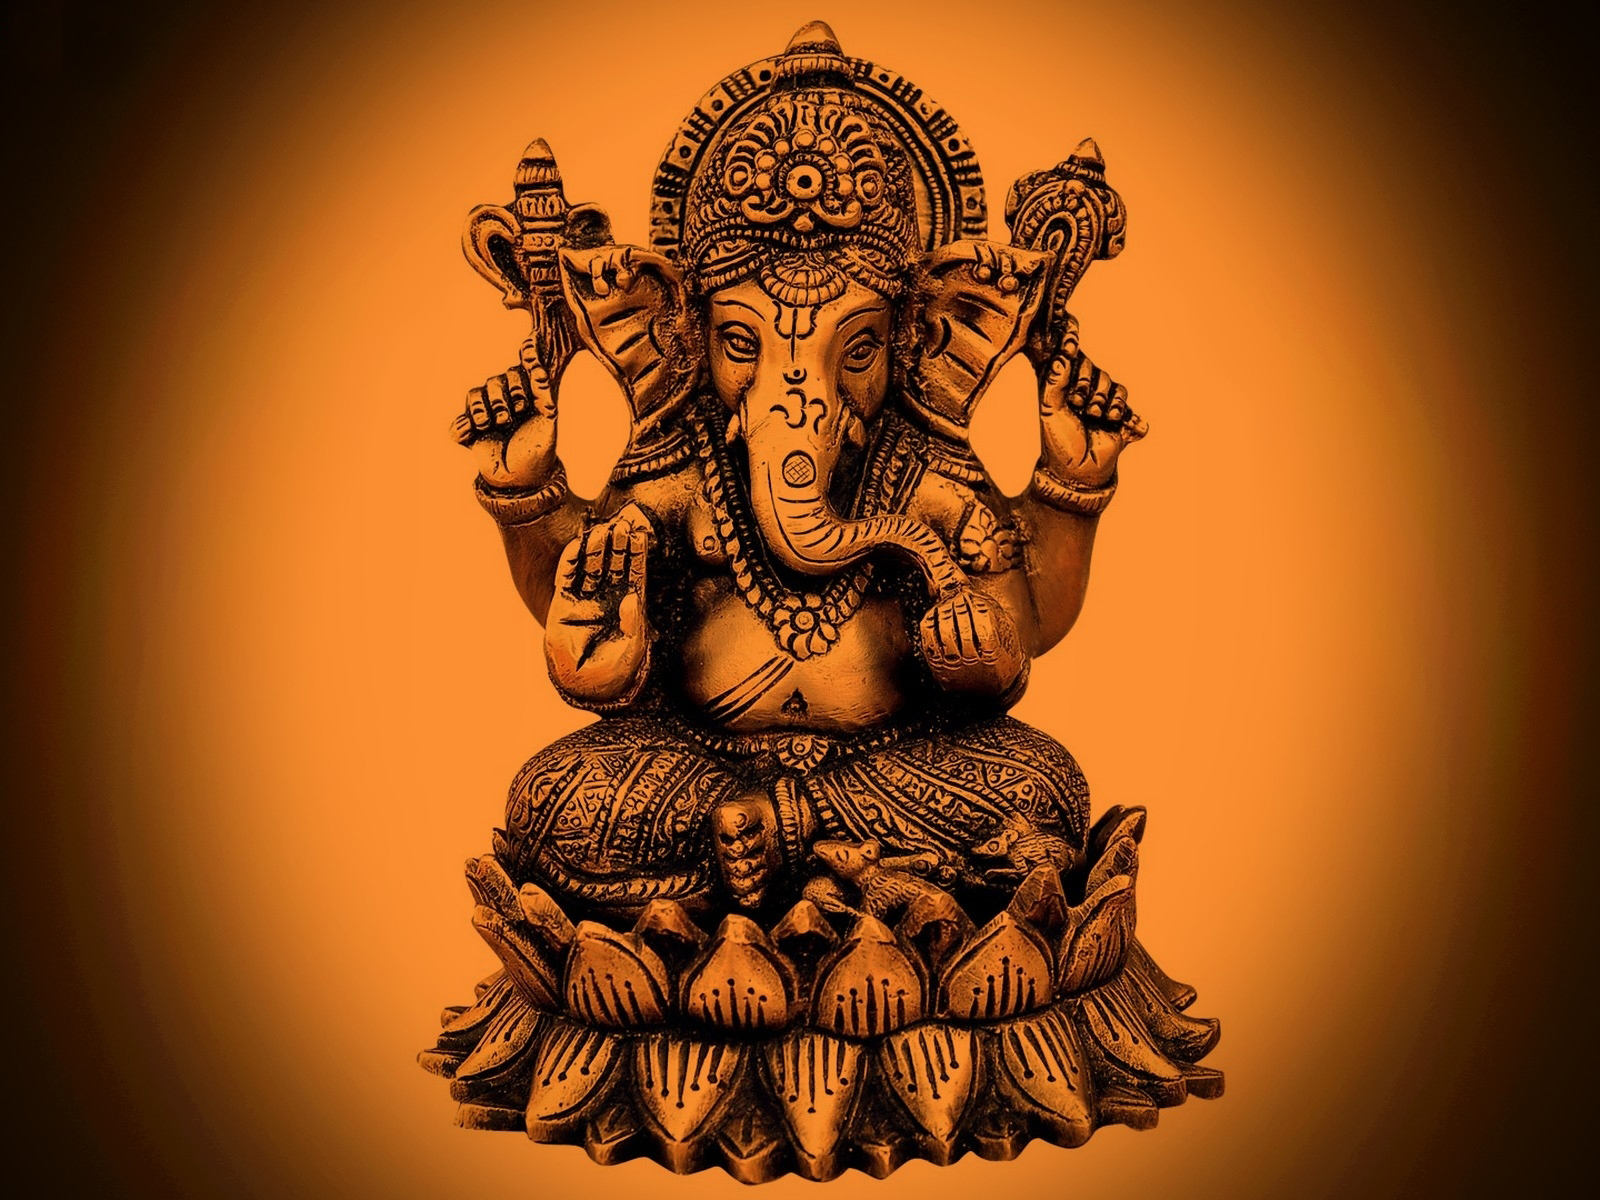 Lord Ganesha Hd Wallpapers